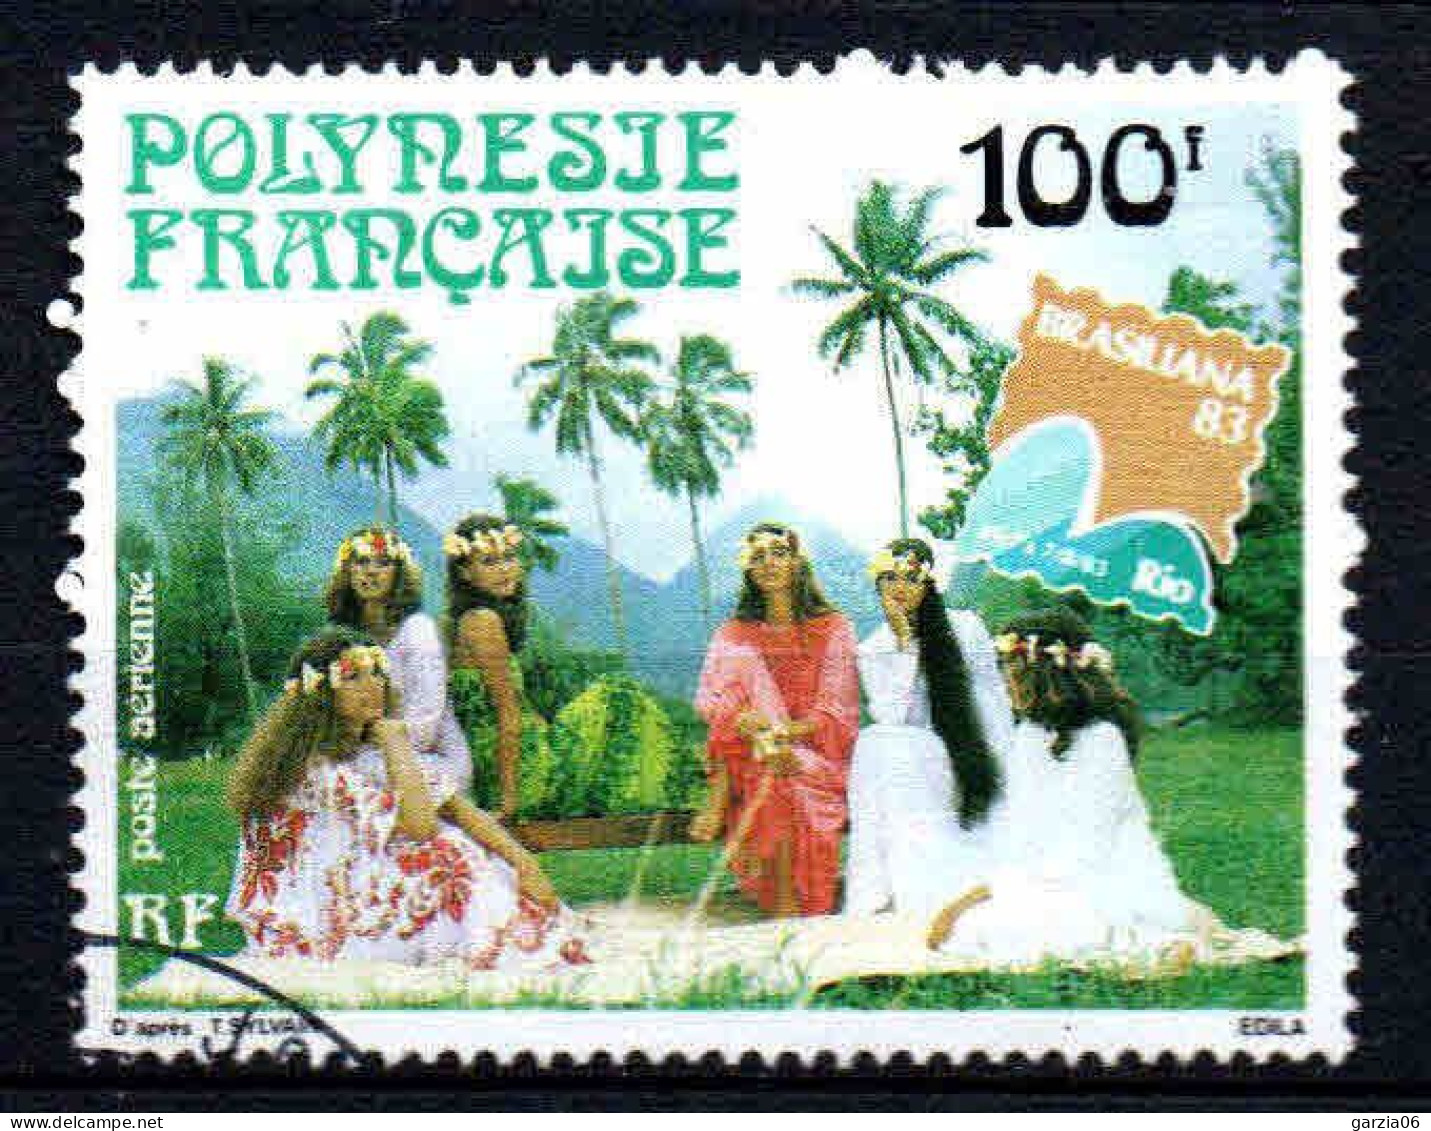 Polynésie - 1983  - Brasiliana  -  PA 176  - Oblit - Used - Used Stamps